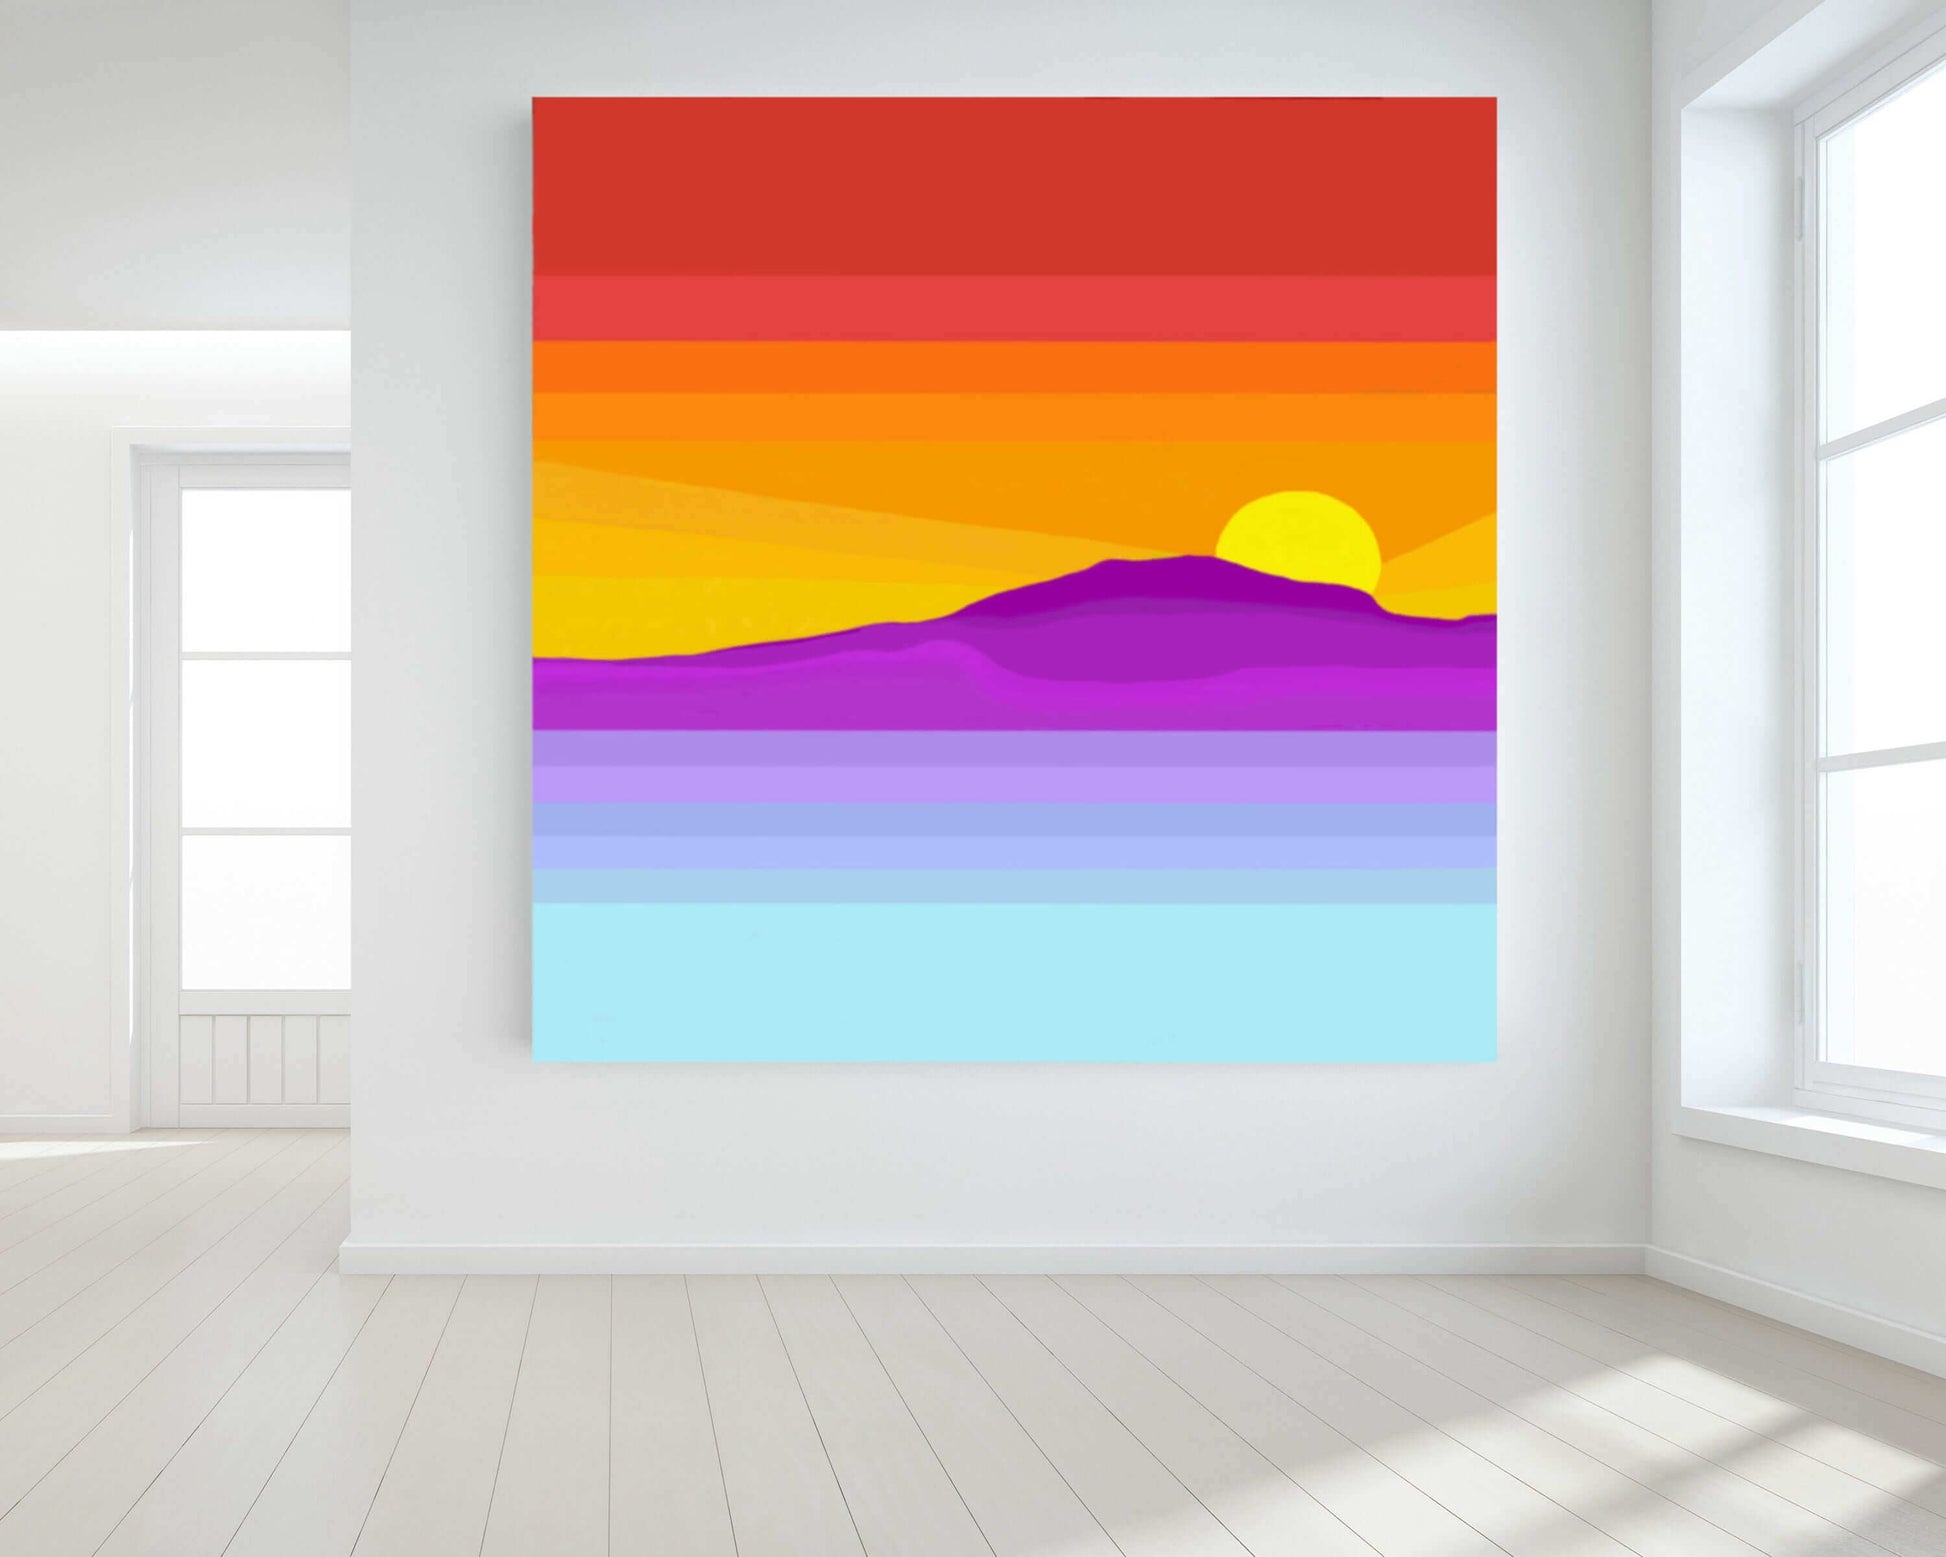 Boldly Graphic “Arizona Sunset” Desert Landscape Canvas Print Wall Art Large Canvas on Wall